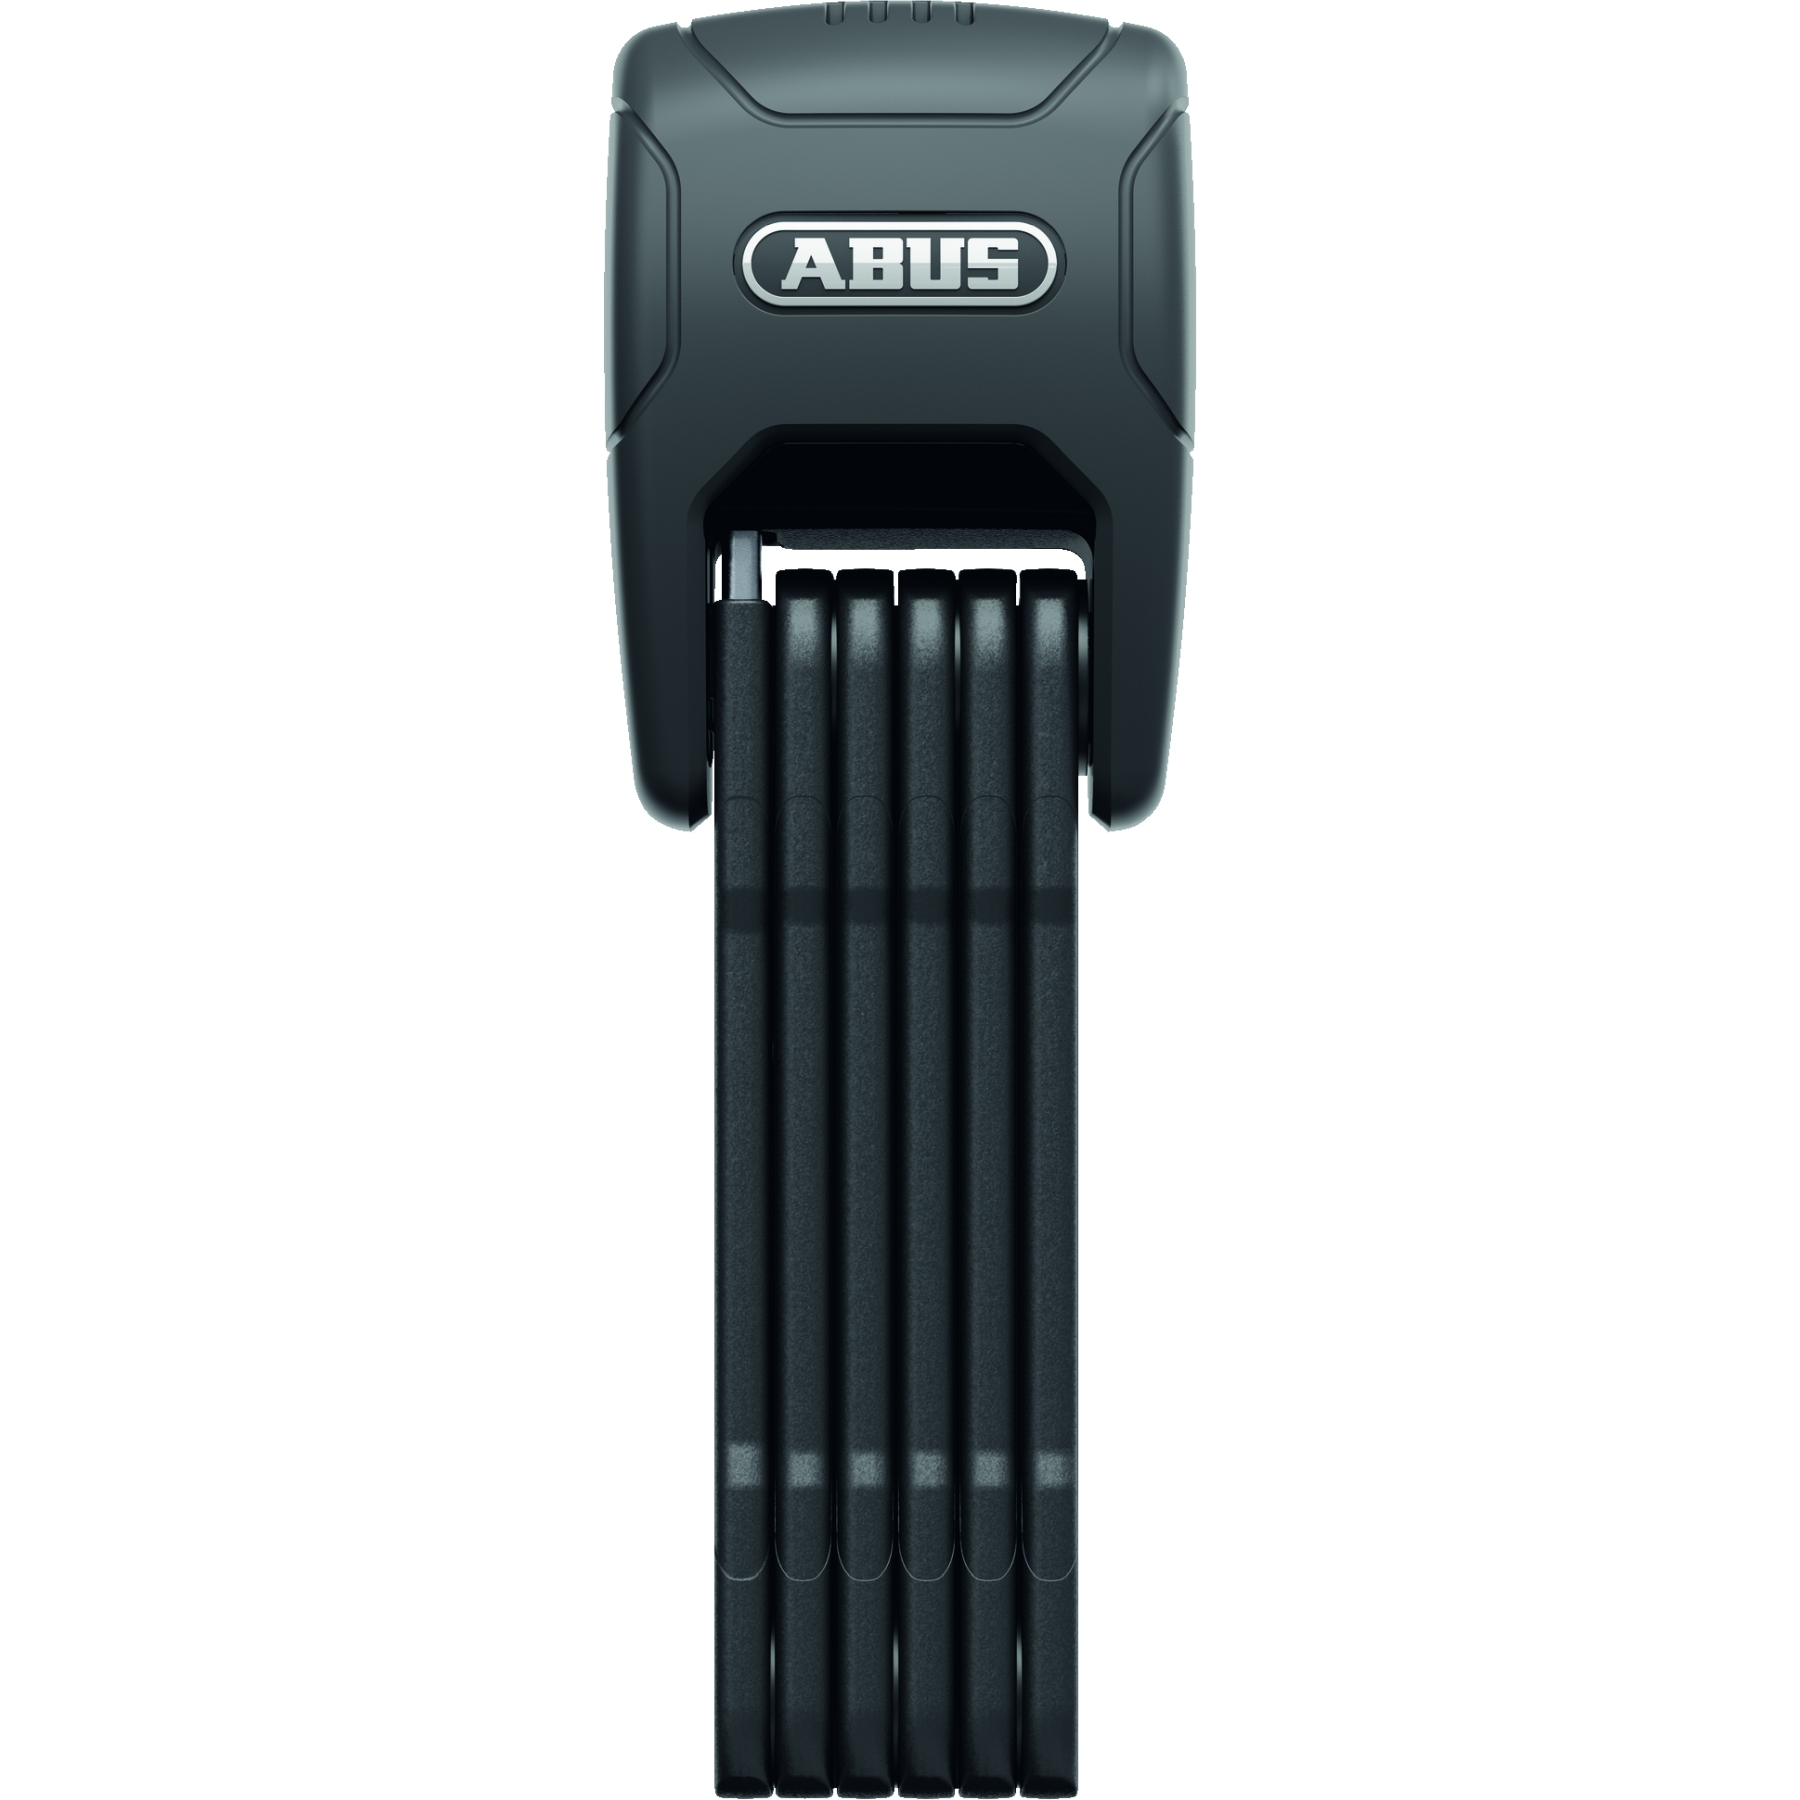 Productfoto van ABUS Bordo Granit 6500KA/90 Vouwbare Slot inkl. Houder SH - zwart